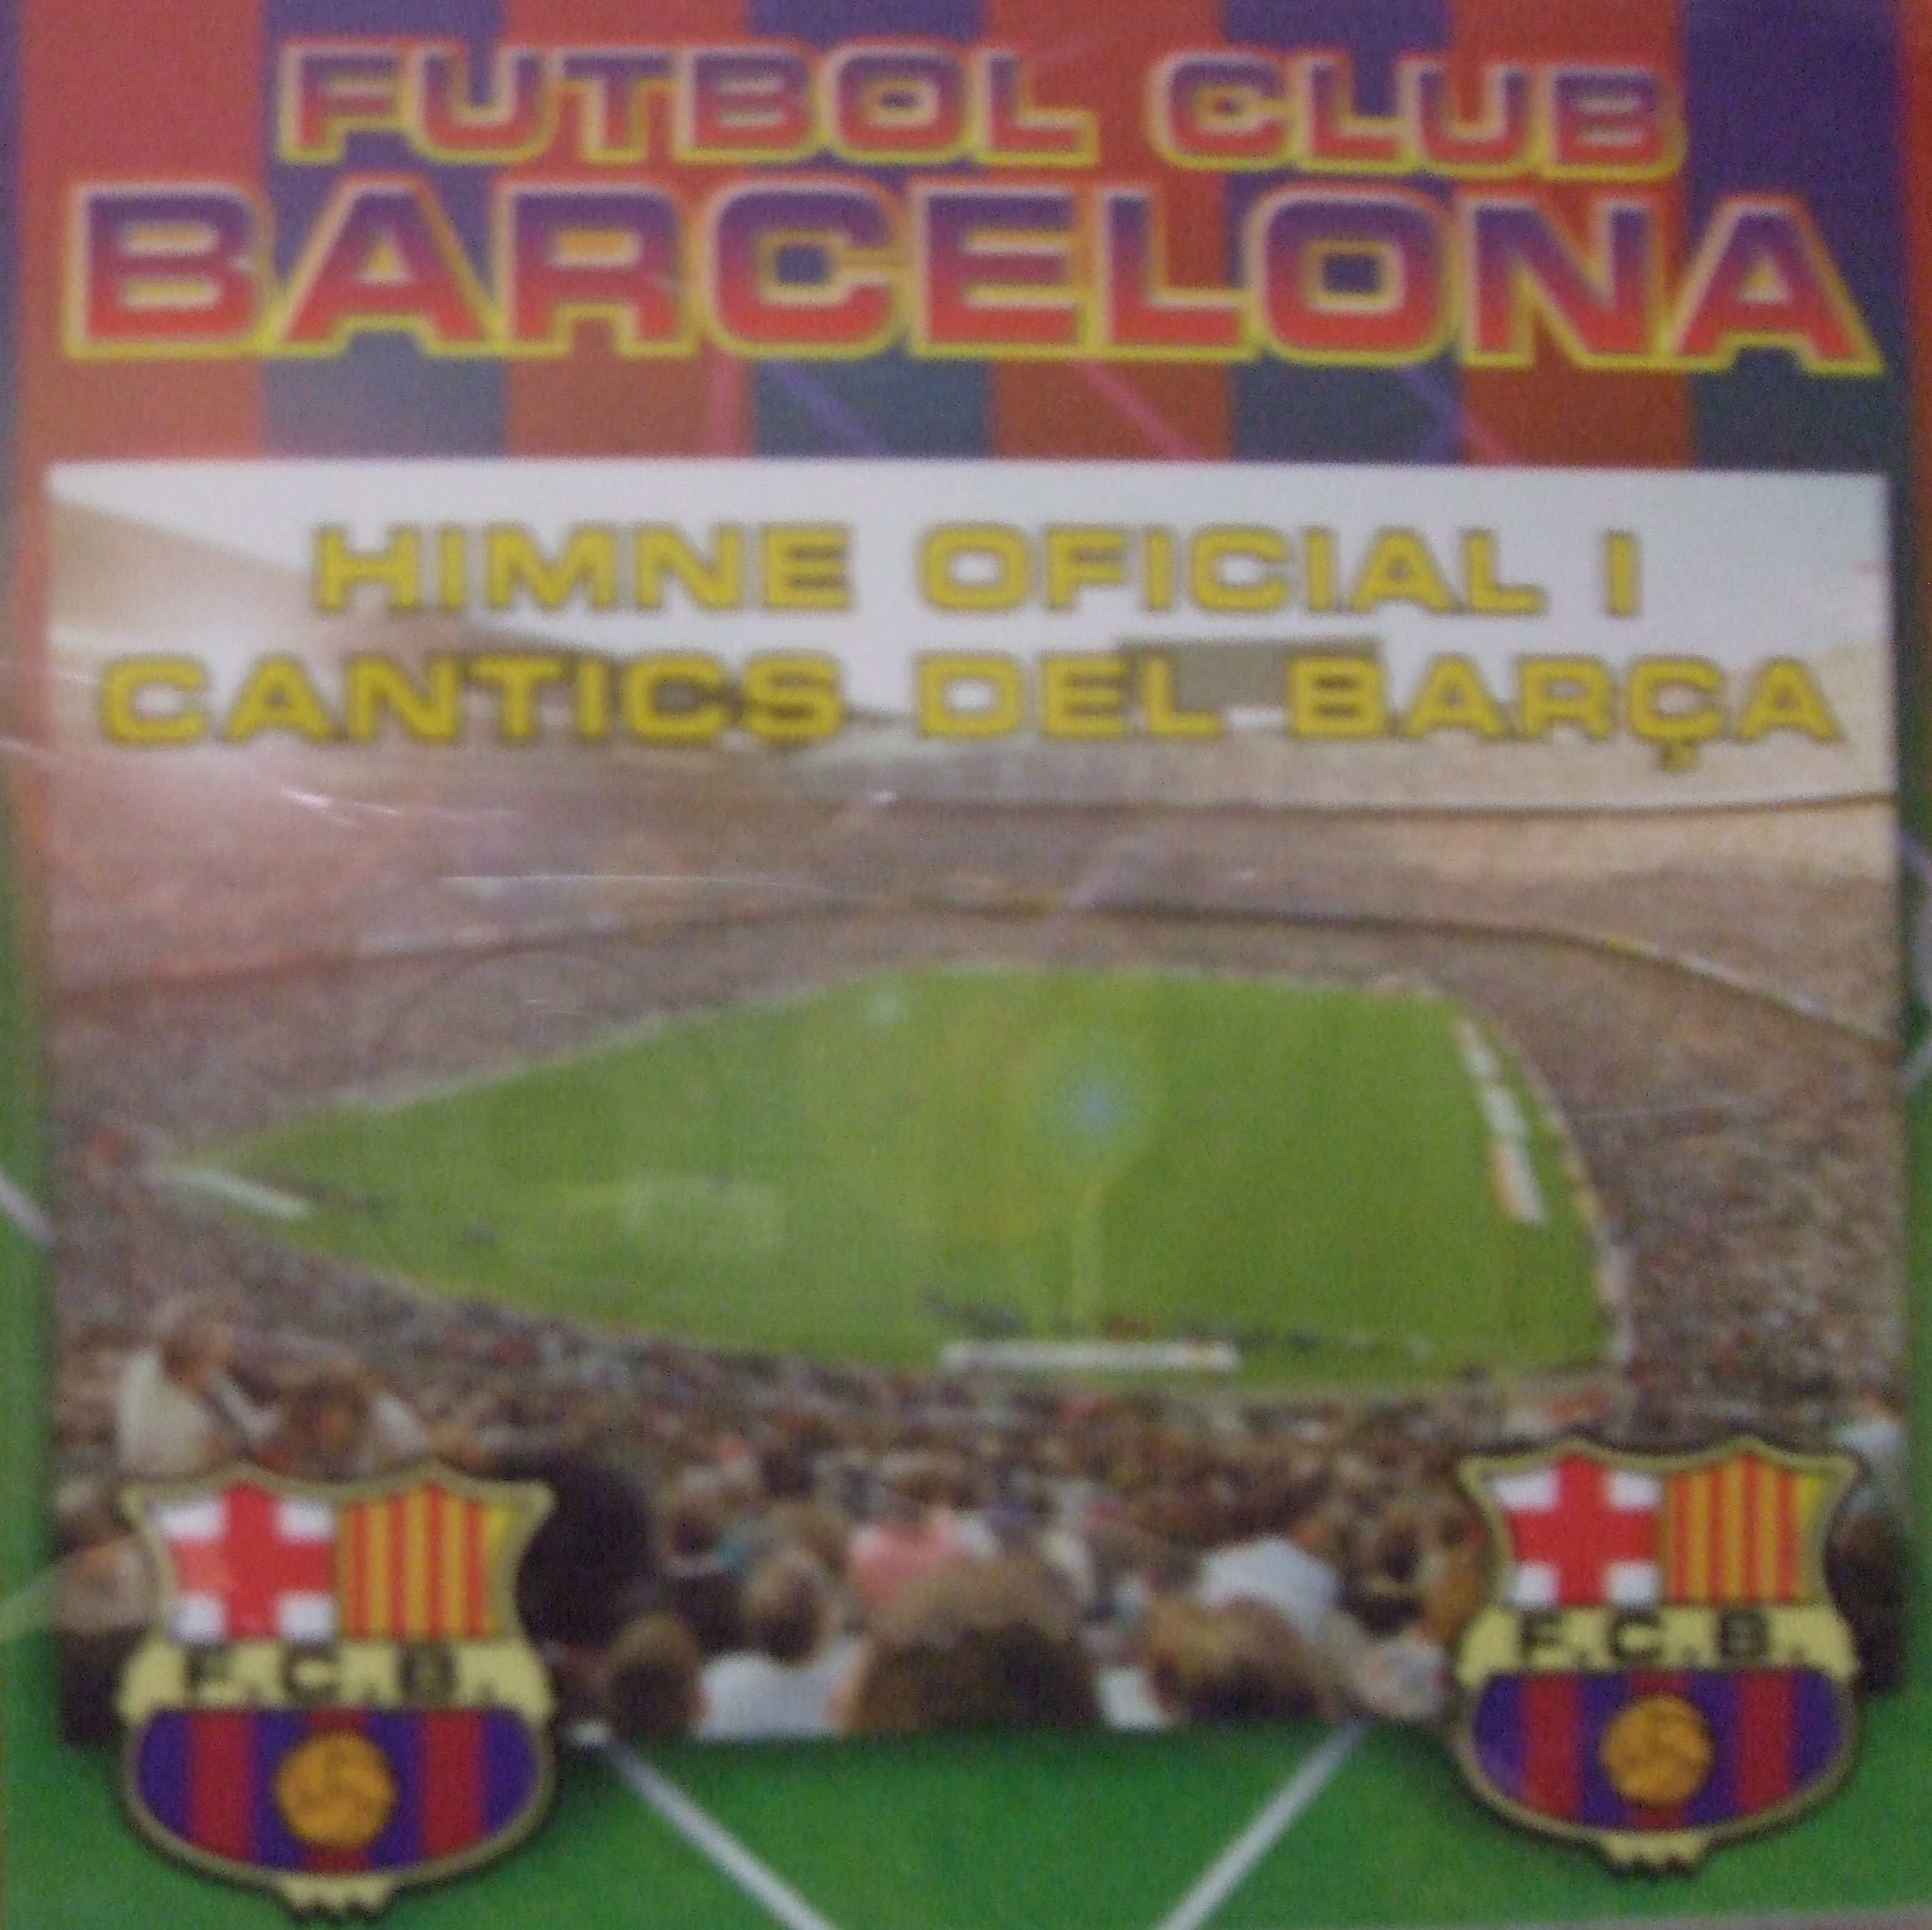 Sports Goods Mania 現地入手 中古 美品 ラ リーガ１部 ｆｃバルセロナ公式アンセム チャント集 Futbol Club Barcelona Himne Oficial I Cantics Del Barca ｃｄアルバム